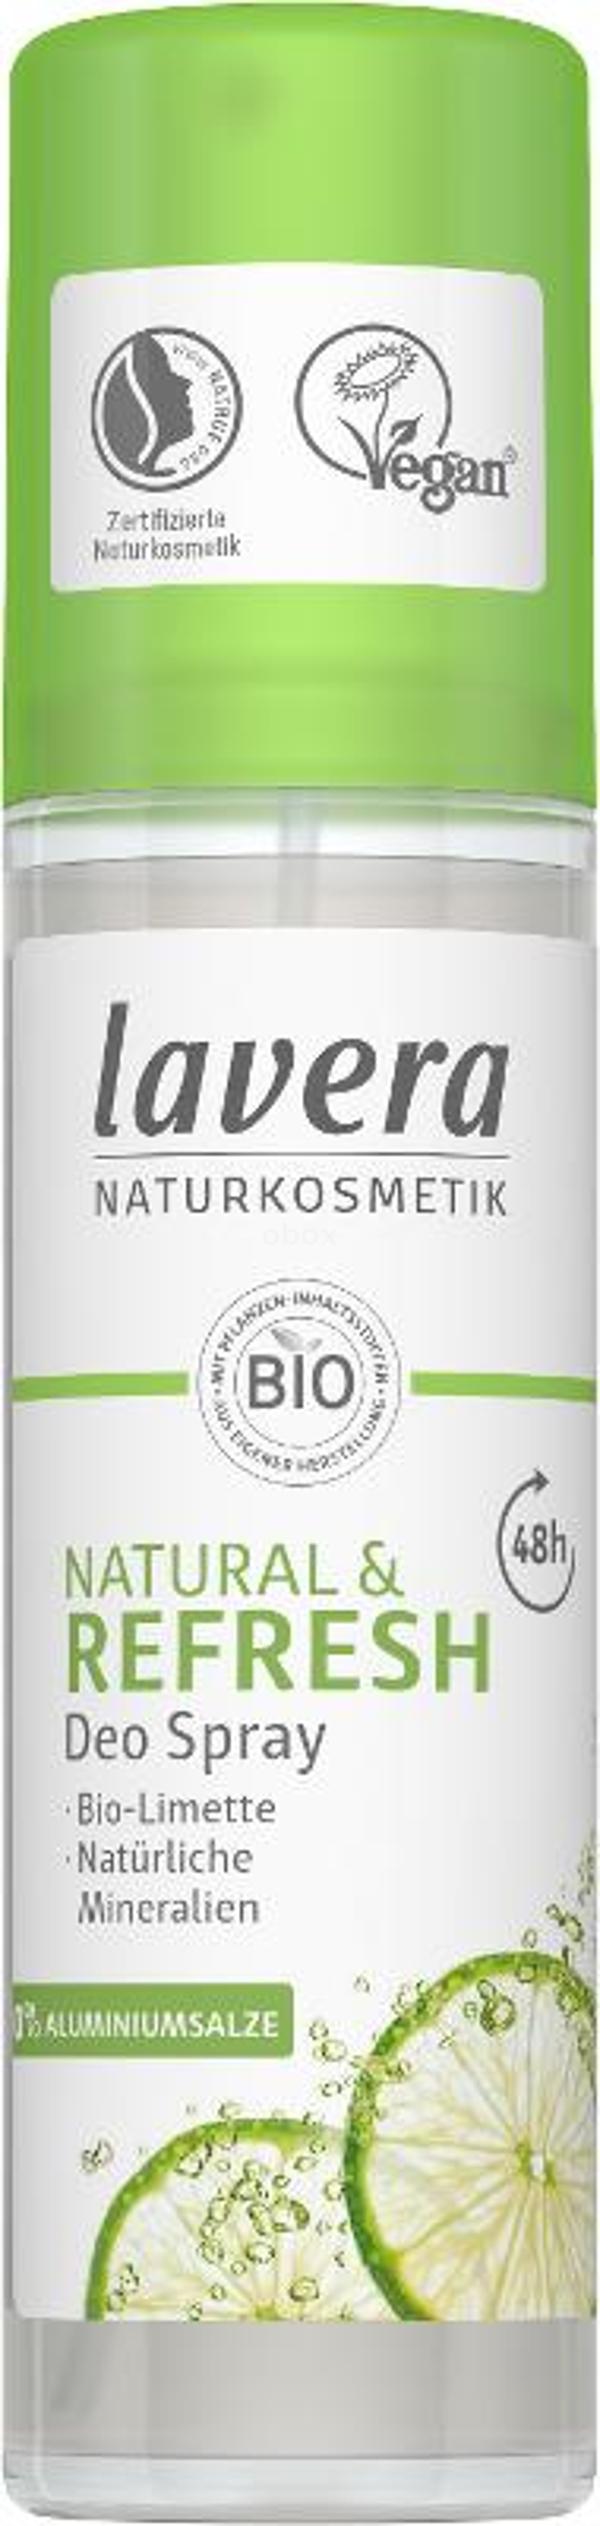 Produktfoto zu Lavera Deo Spray Refresh - 75ml